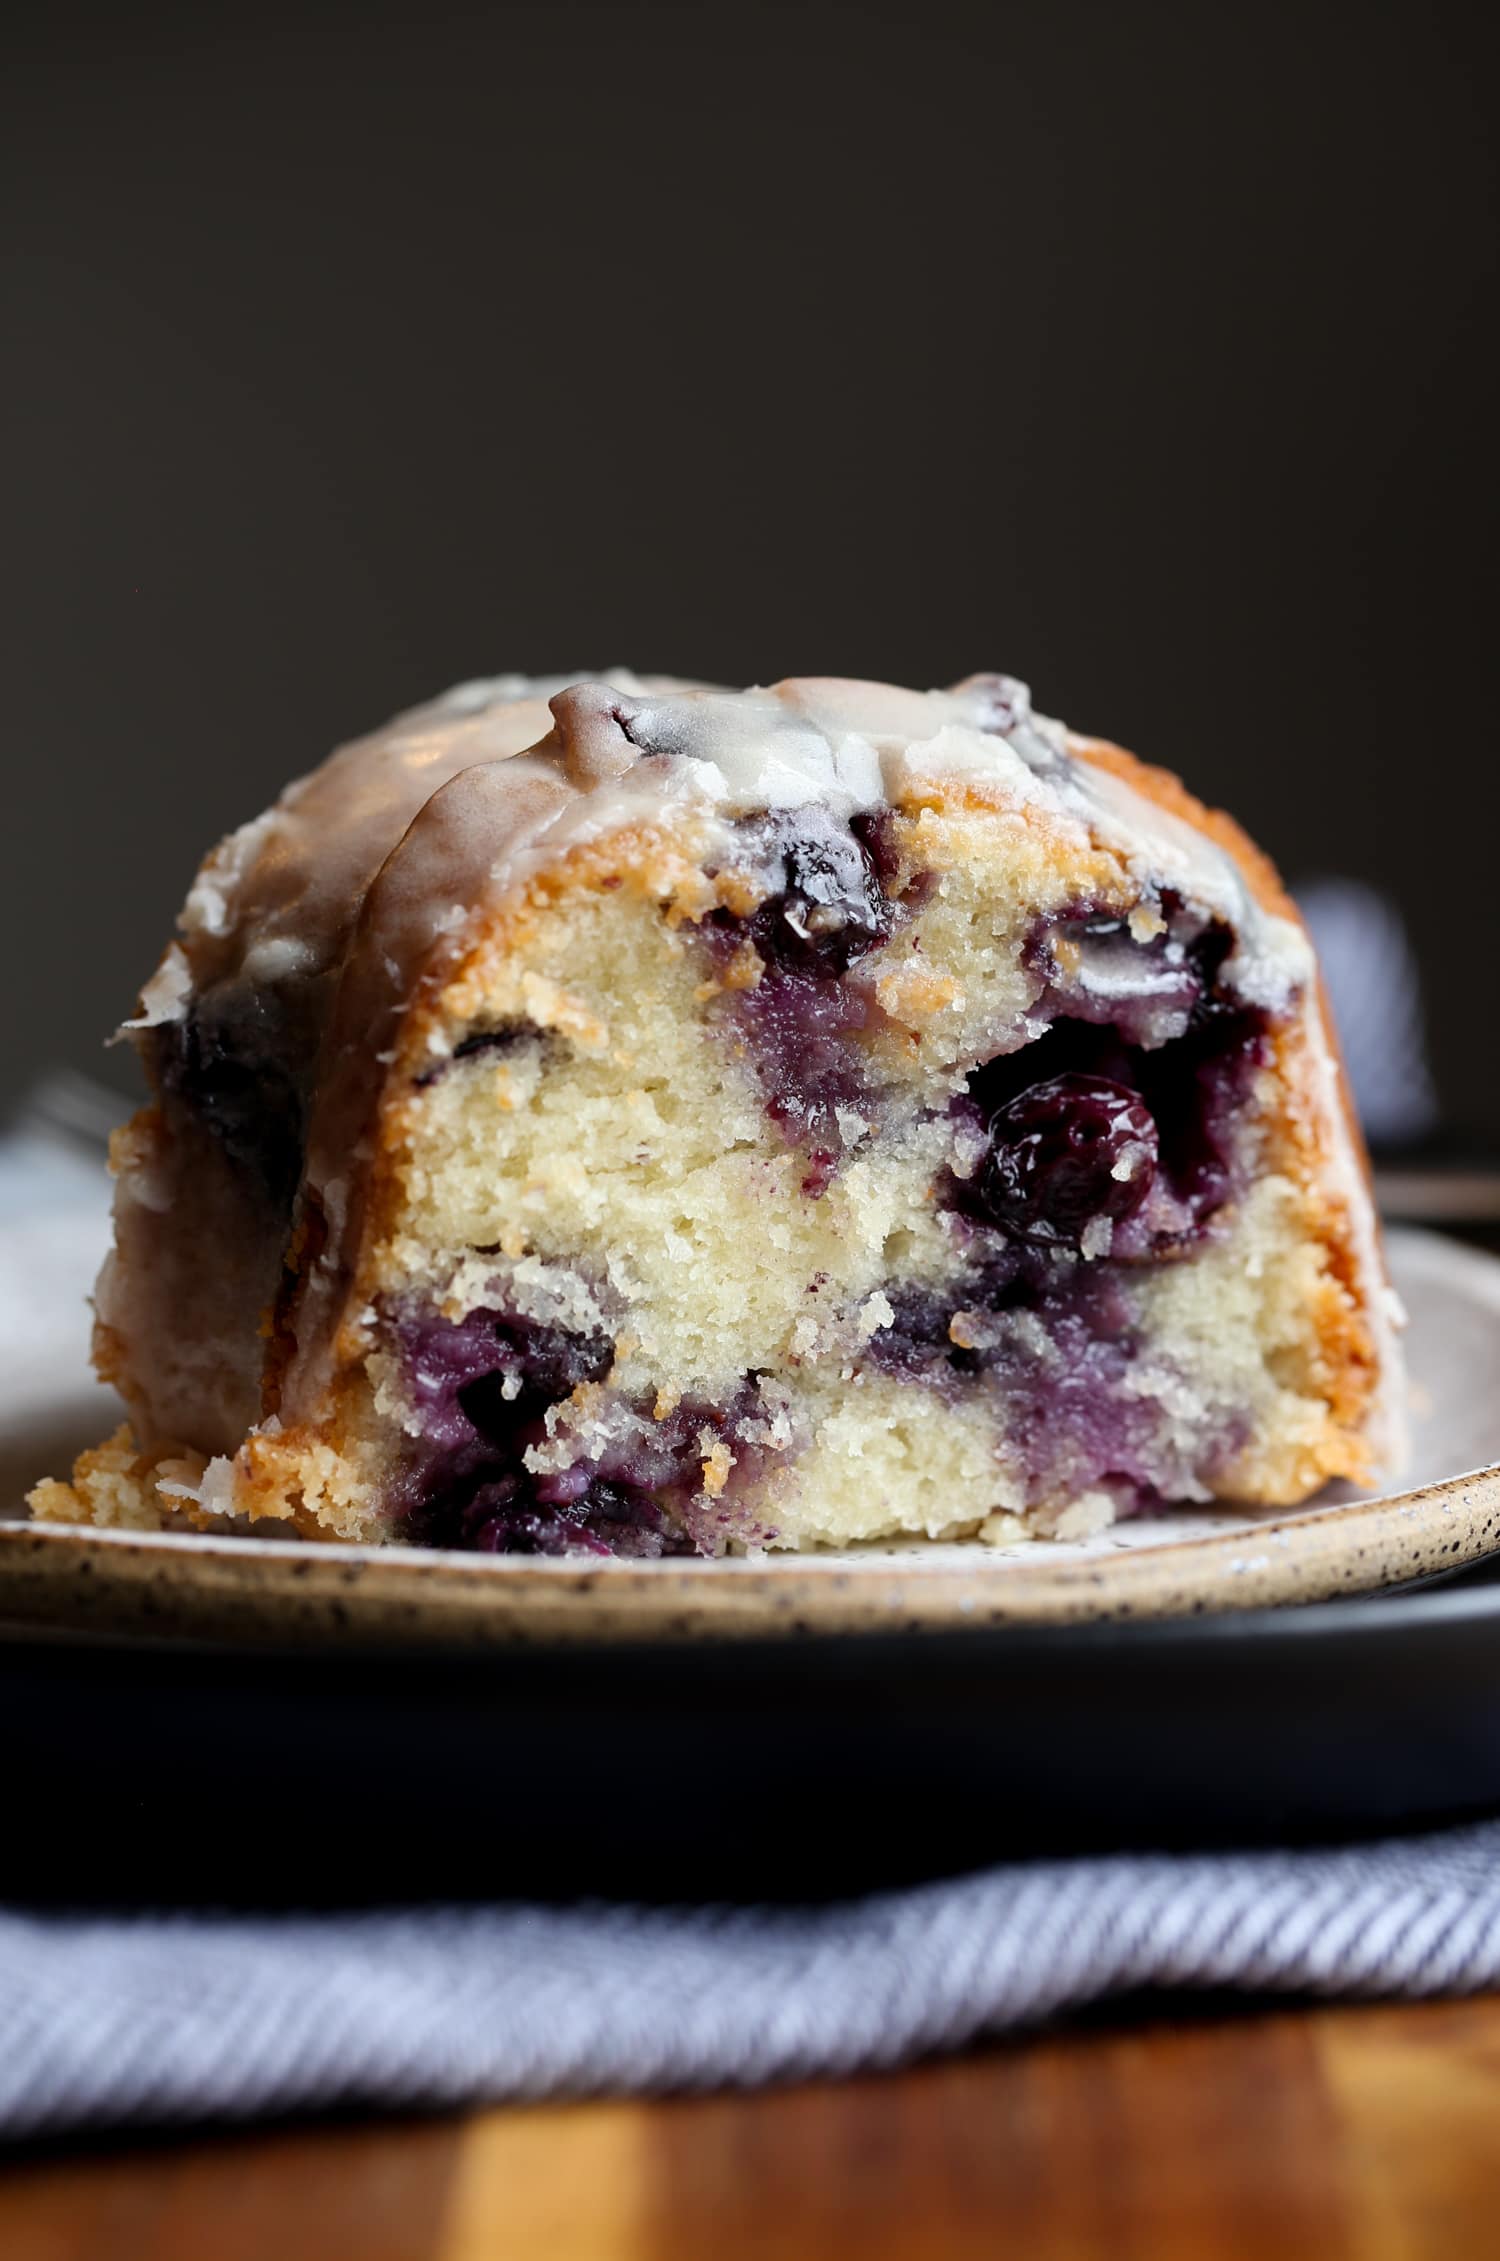 Lemon Blueberry Breakfast Cake - The Carefree Kitchen